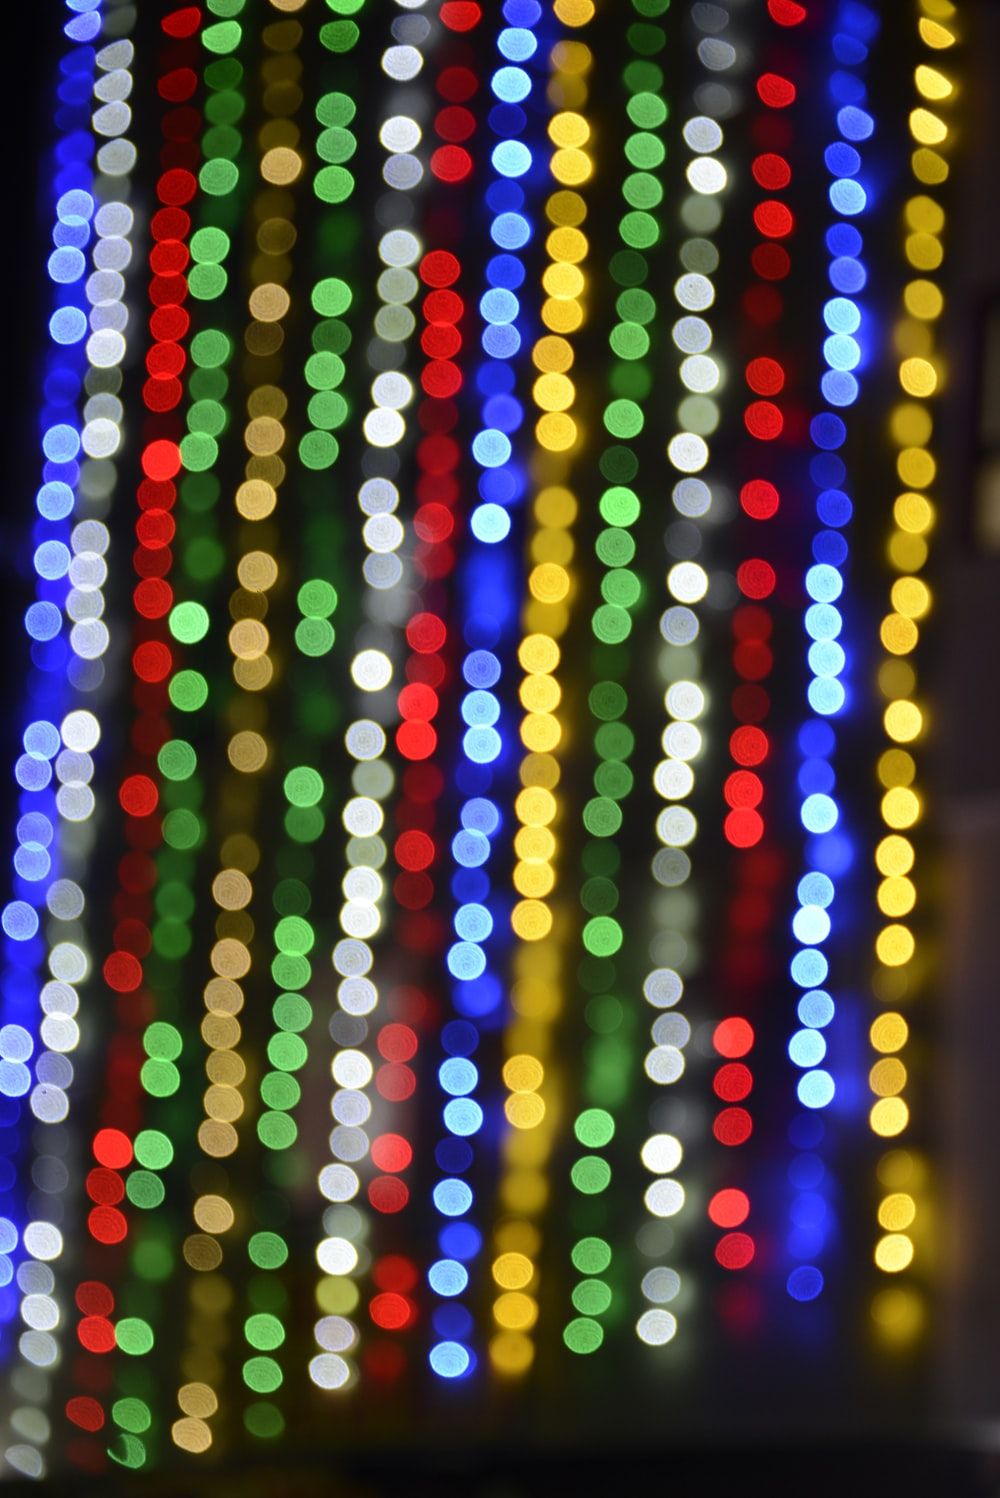 Diwali Lights Picture. Download Free Image